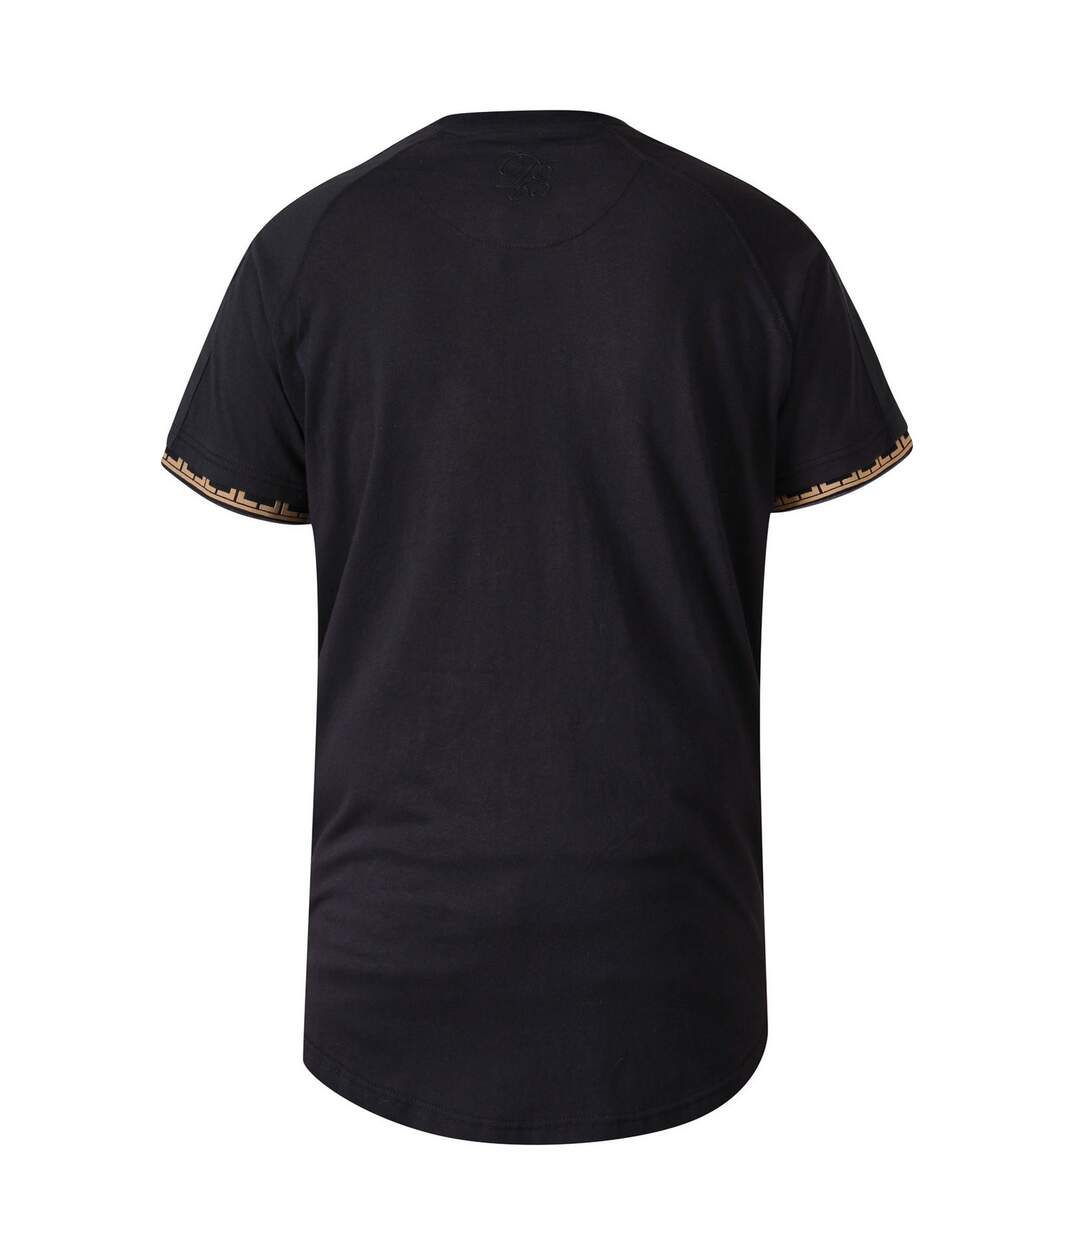 Duke - T-shirt manches courtes THOR - Homme (Noir) - UTDC298